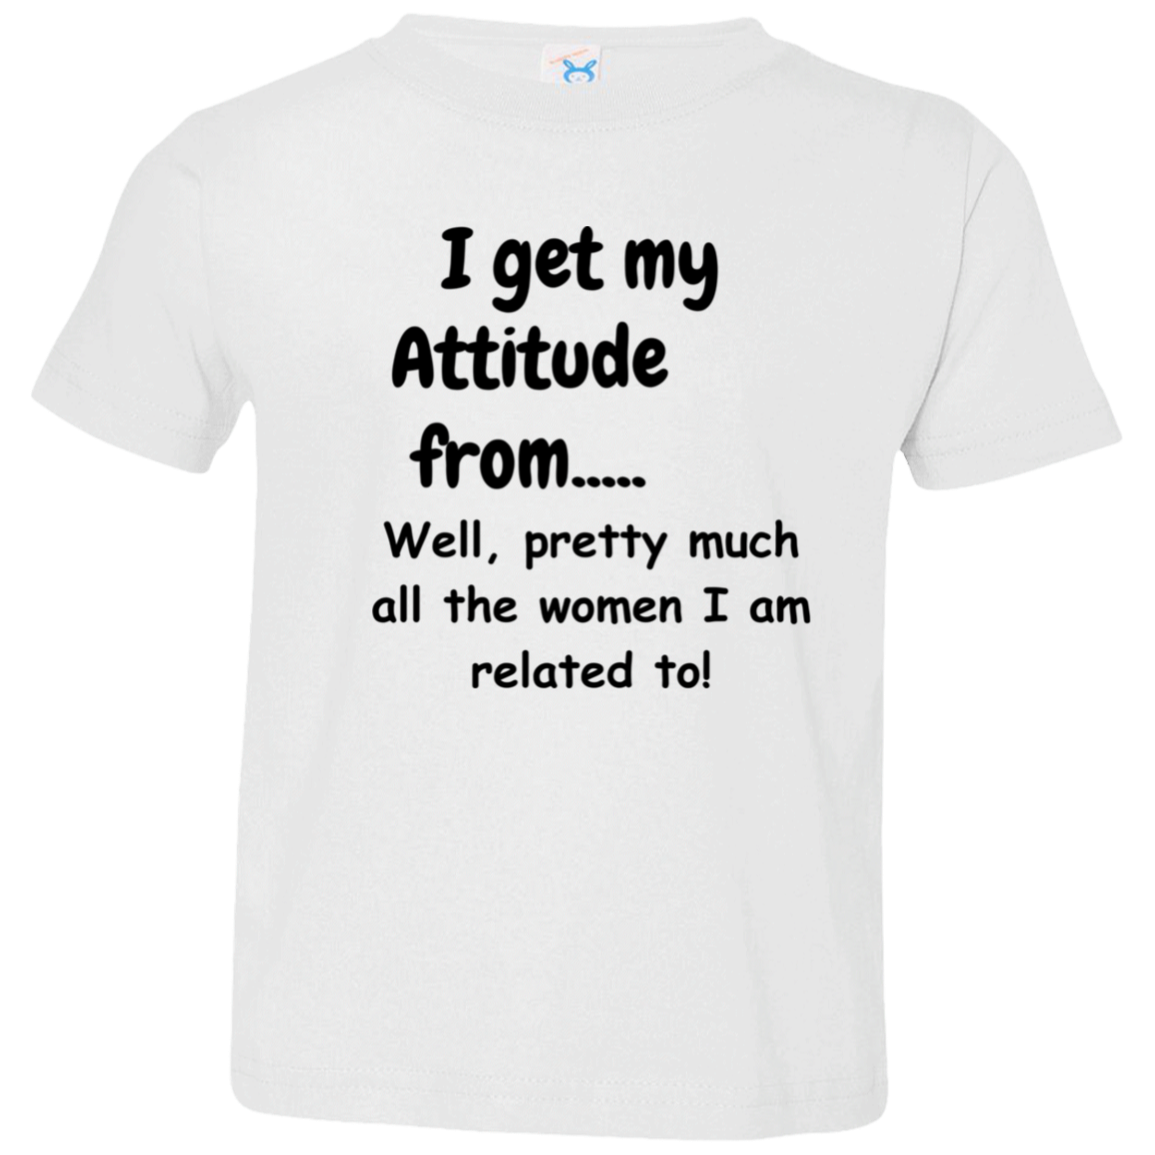 I get my Attitude! Tee